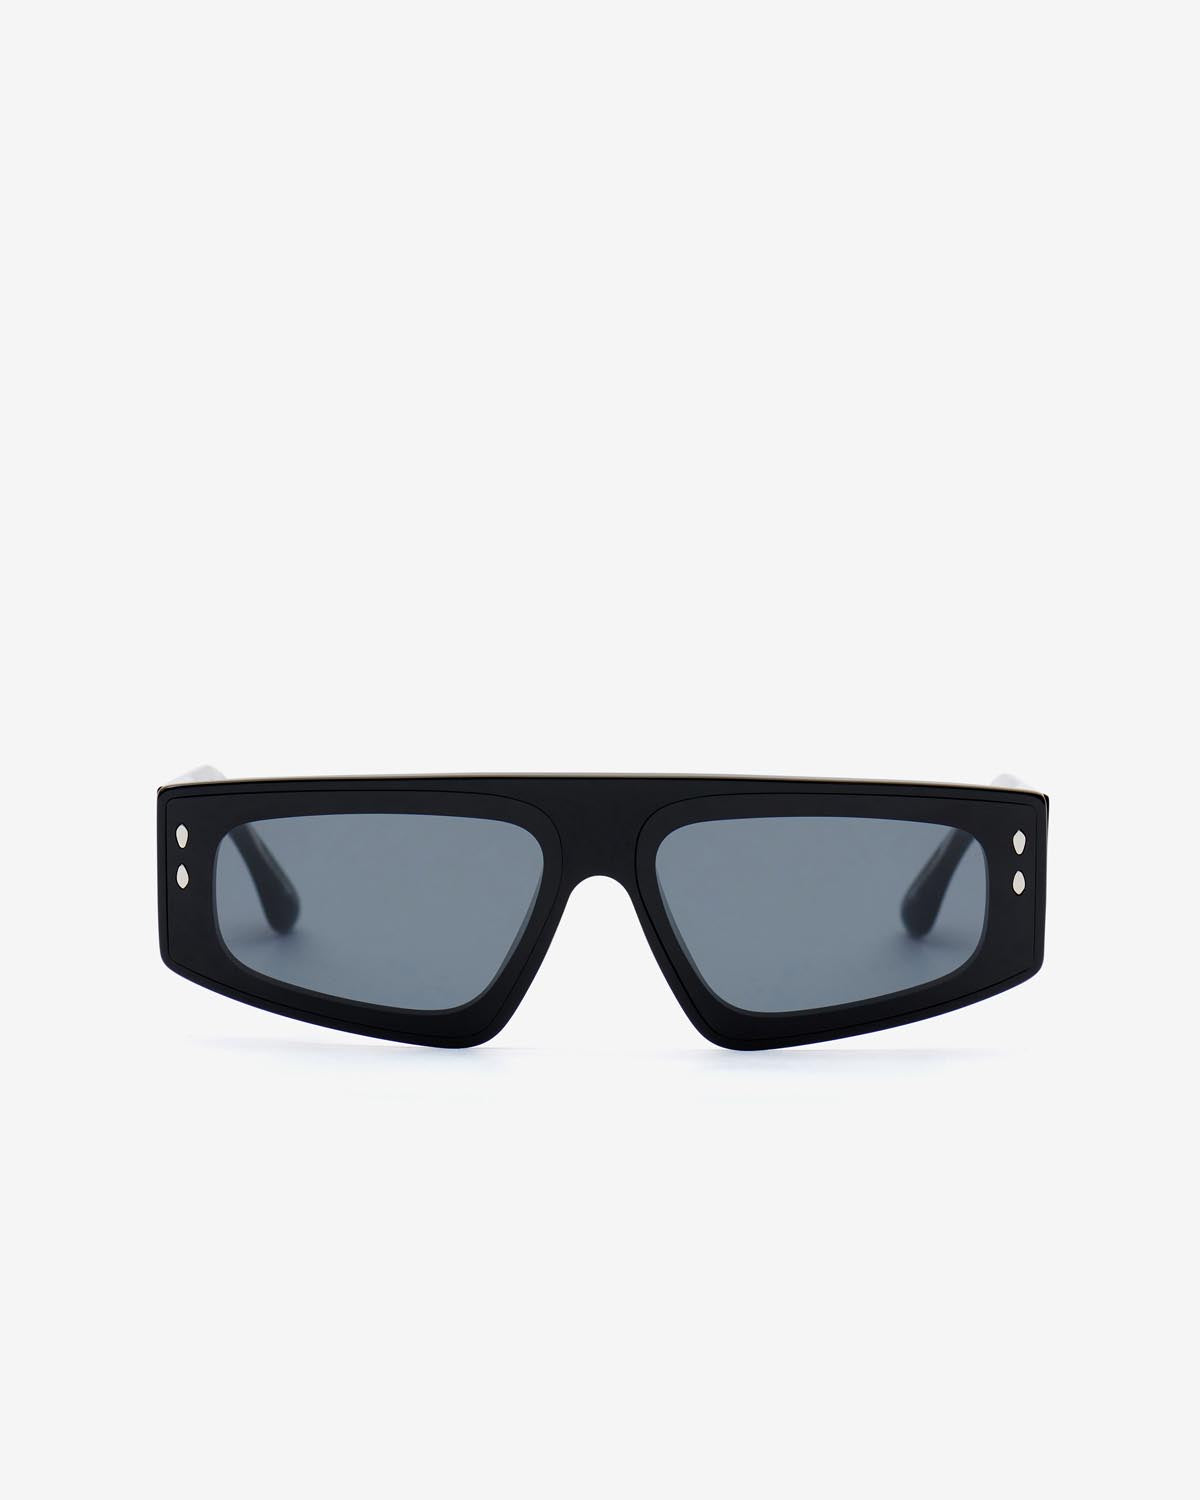 Zoomy occhiali da sole Woman Black pall-gray 2